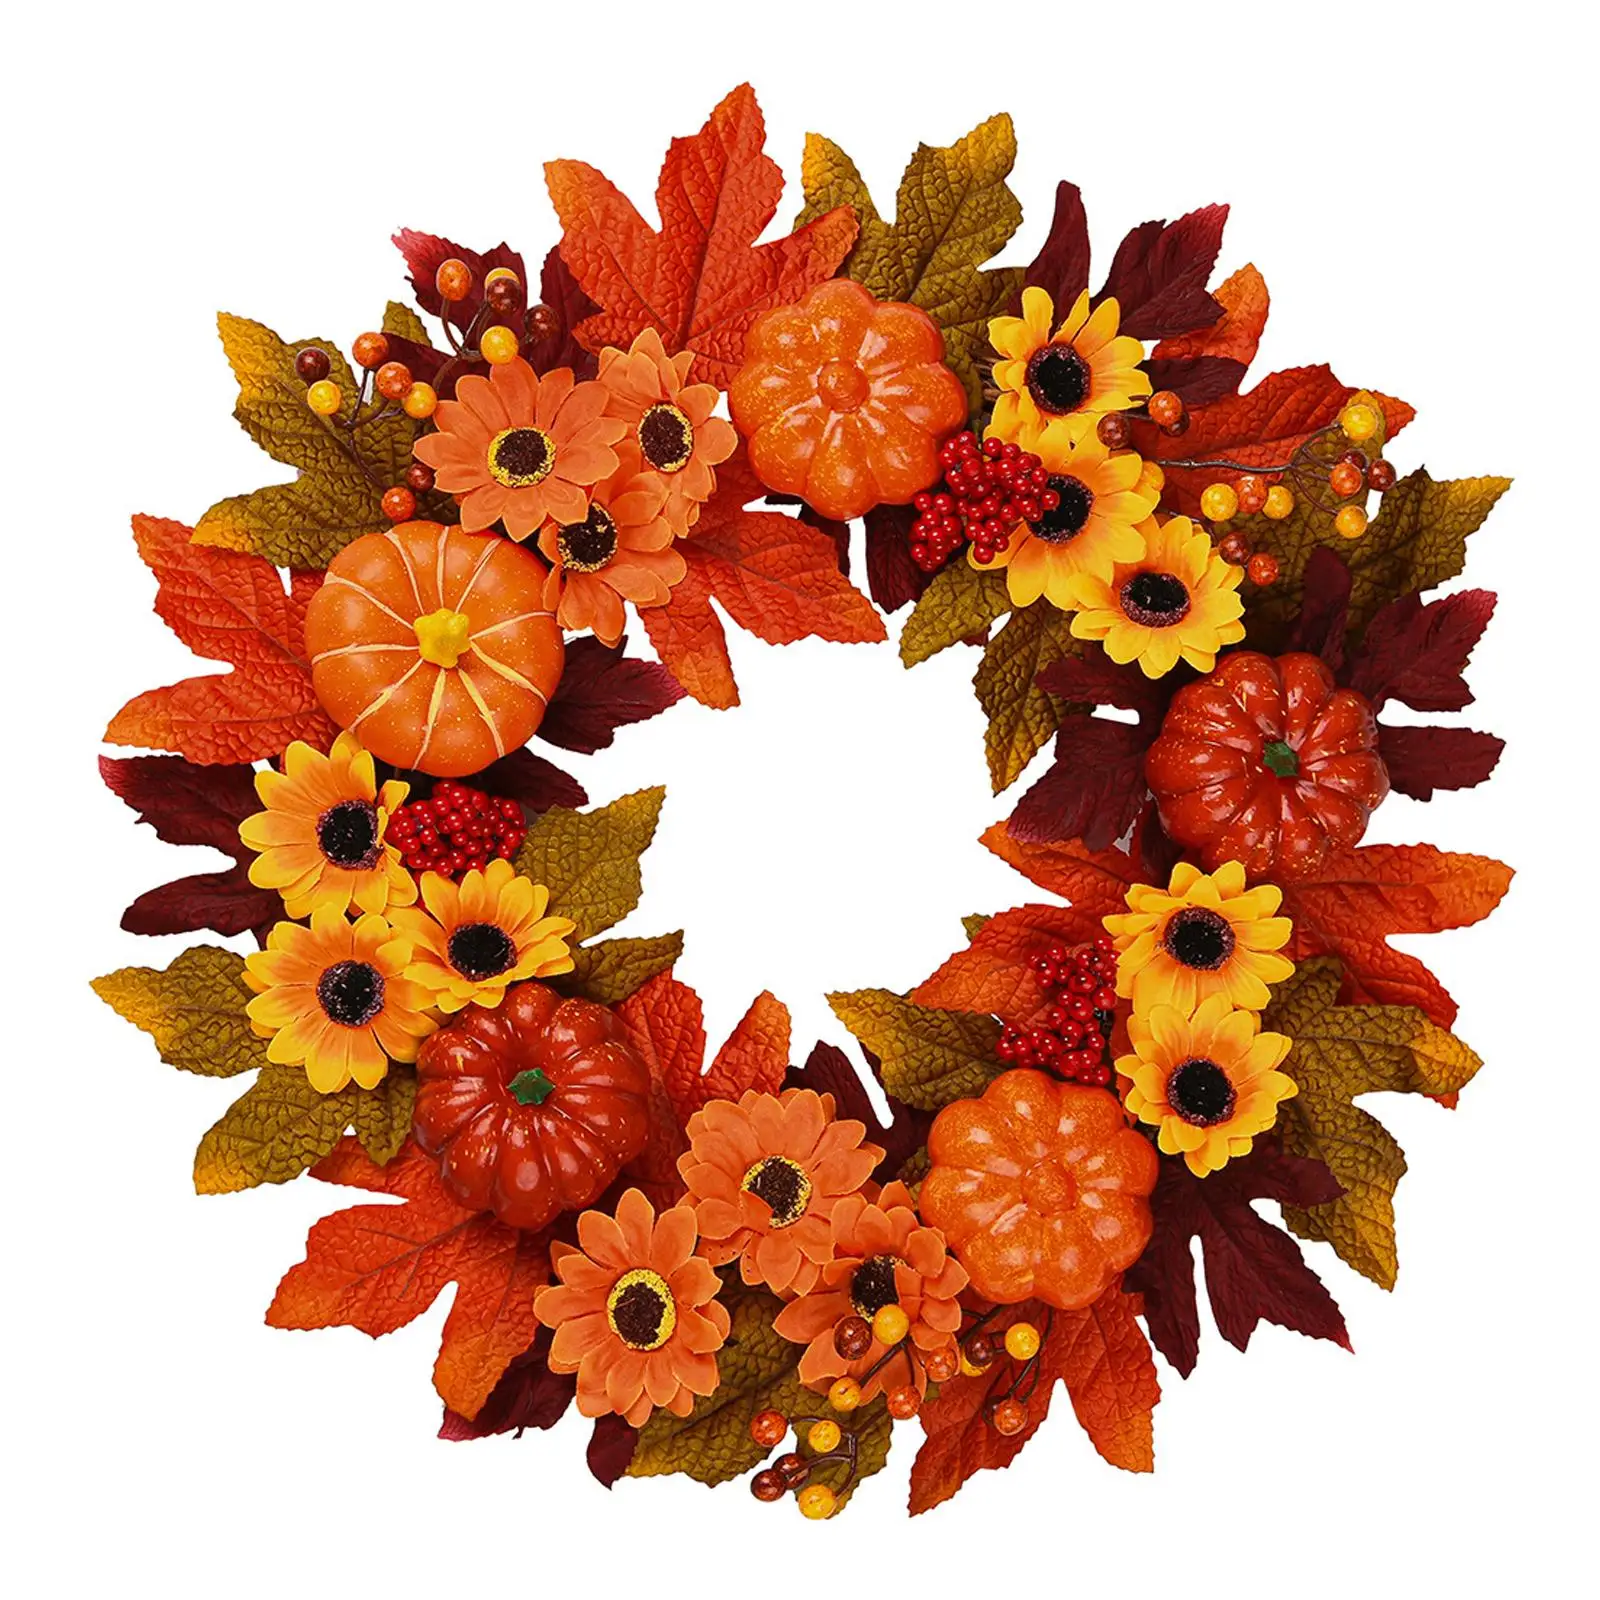 50cm Fall Wreath Harvest Front Door Hanger Artificial Garland Decorative for Autumn Thanksgiving Wall Table Indoor Outdoor